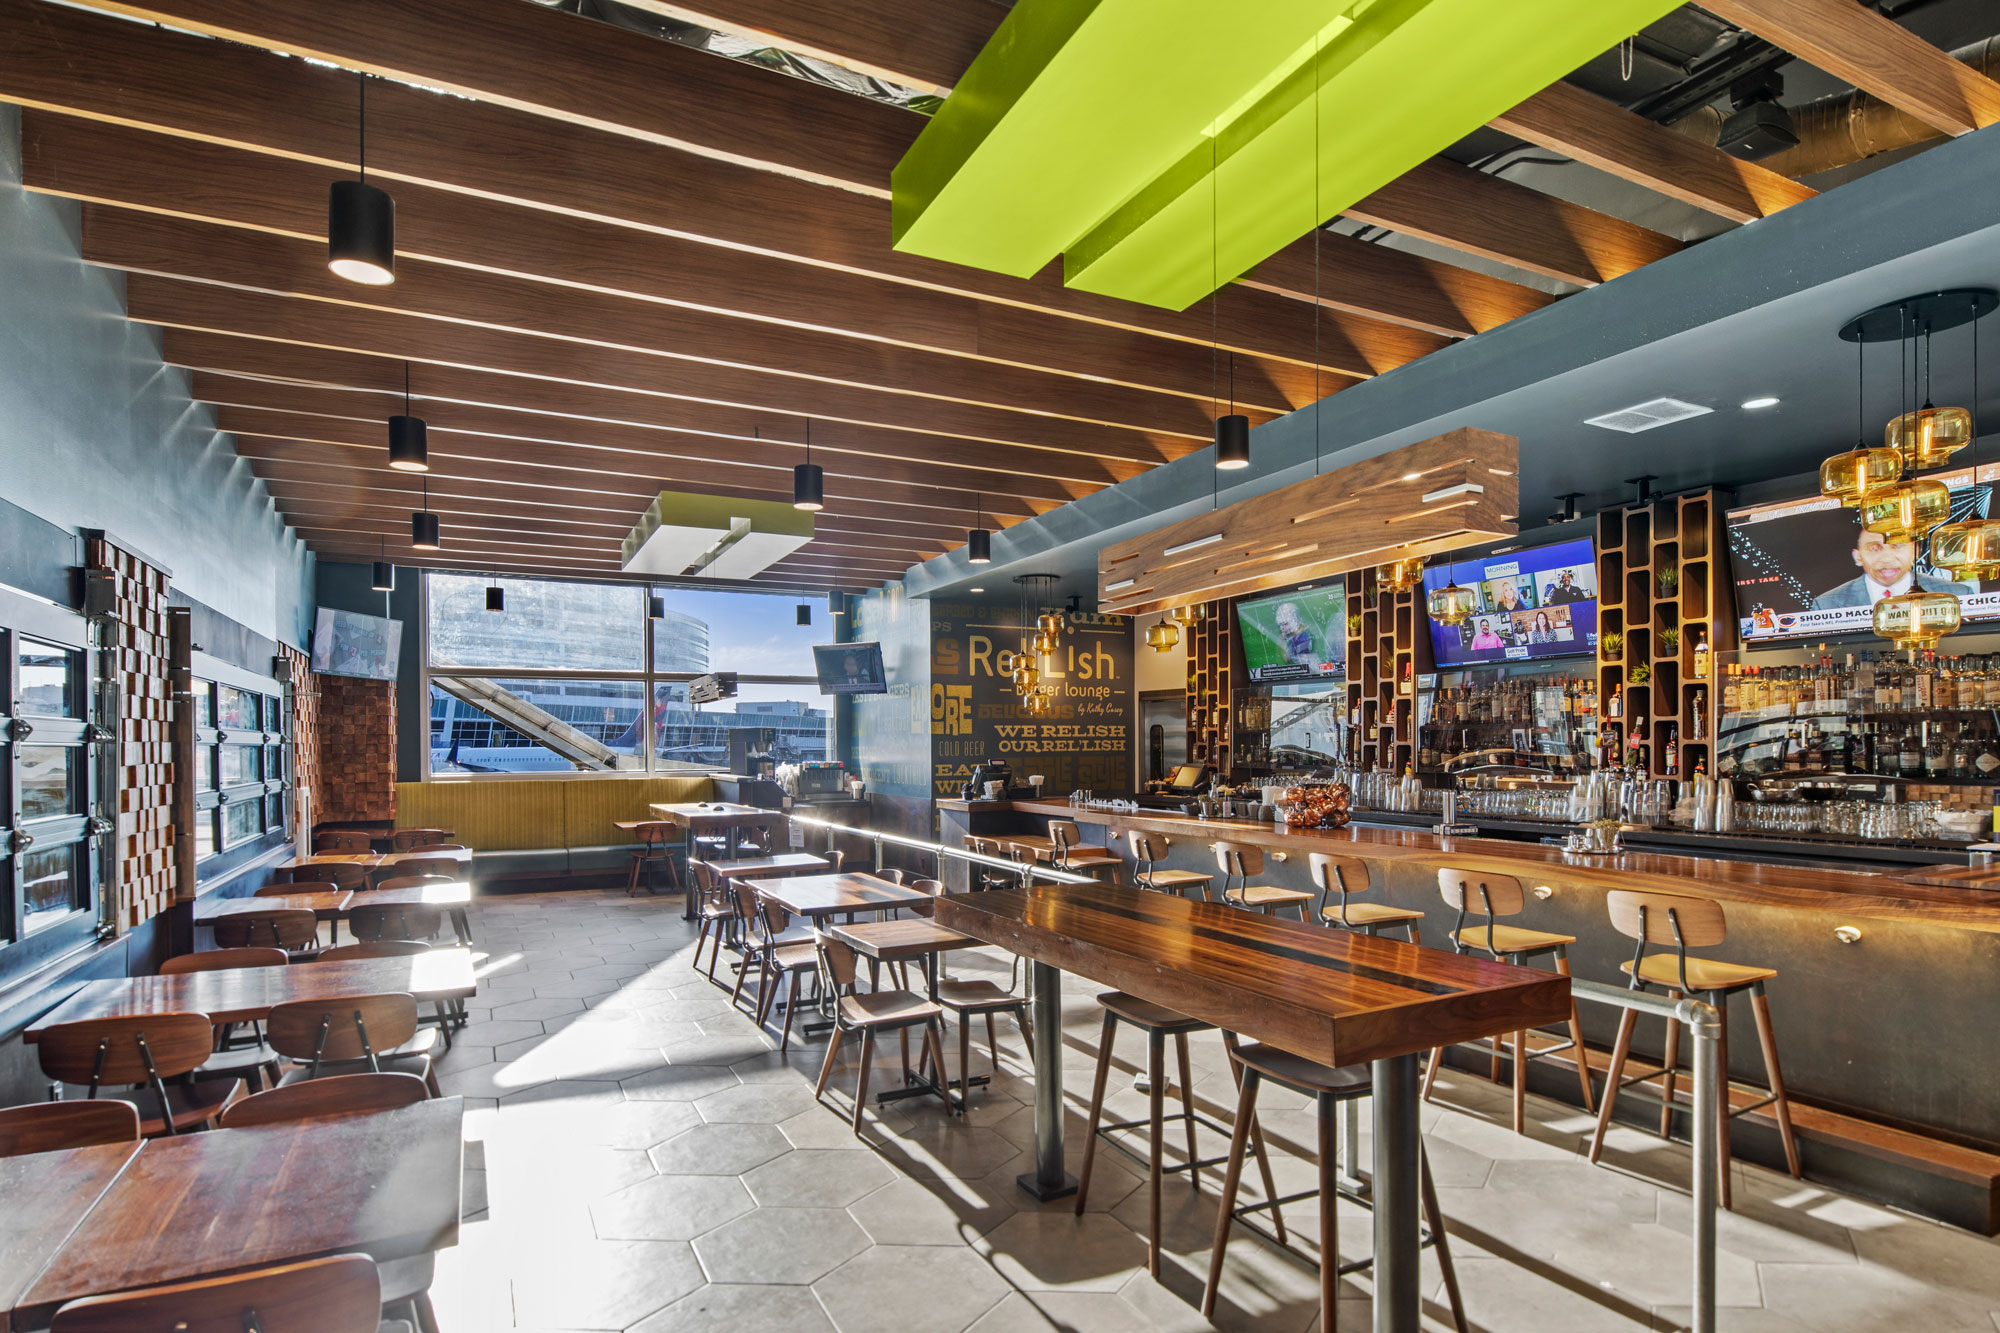 SEA Rel'Lish Burger Lounge Restaurant Seating and Bar